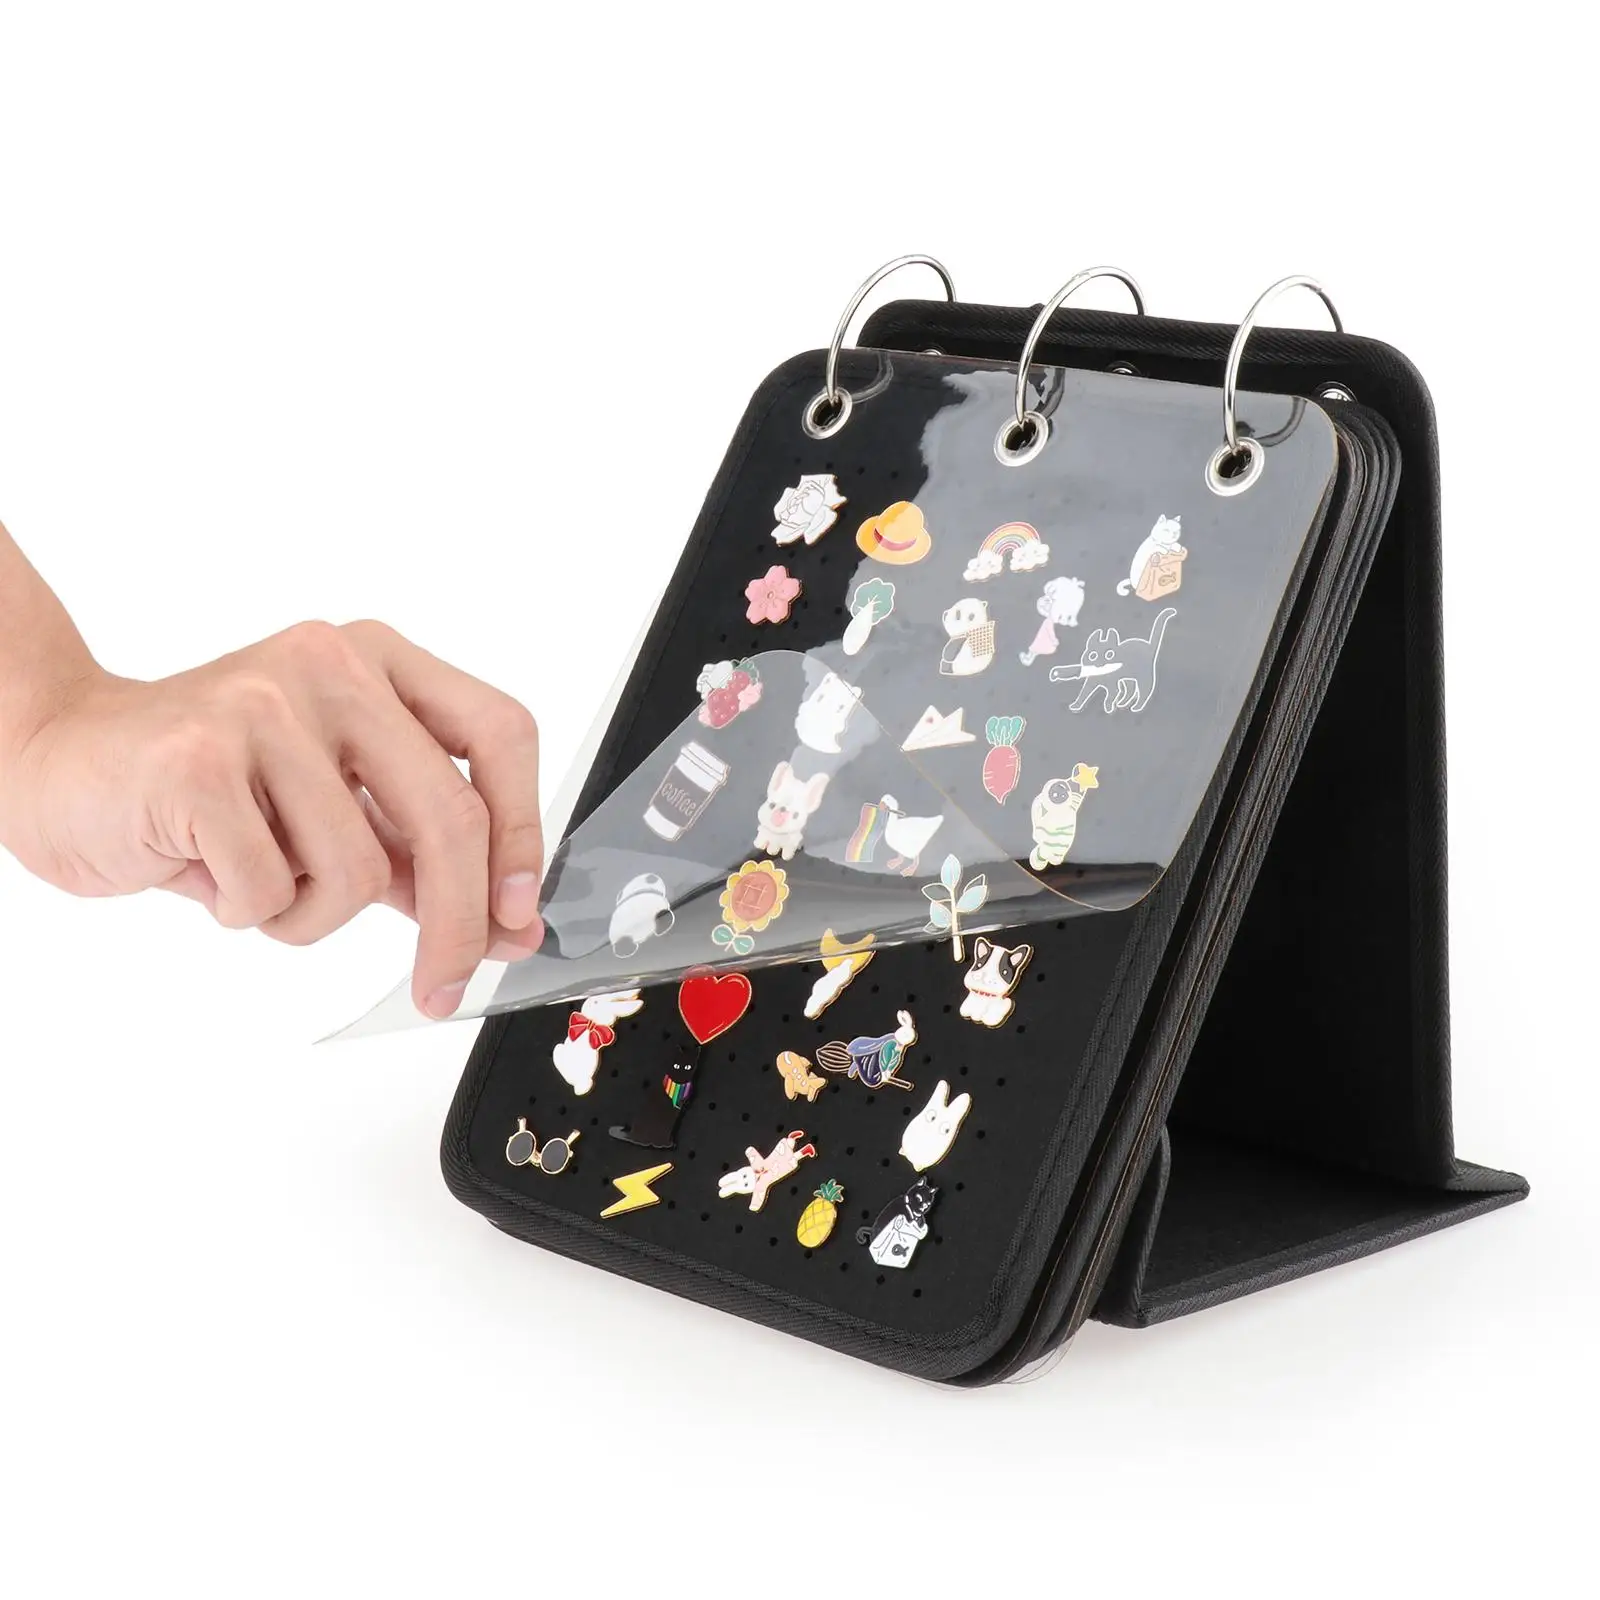 Enamel Pin Display Holder Brooch Pin Storage Organizer Decorative Creative Felt Display Stand for Jewelry Accessories Ladies